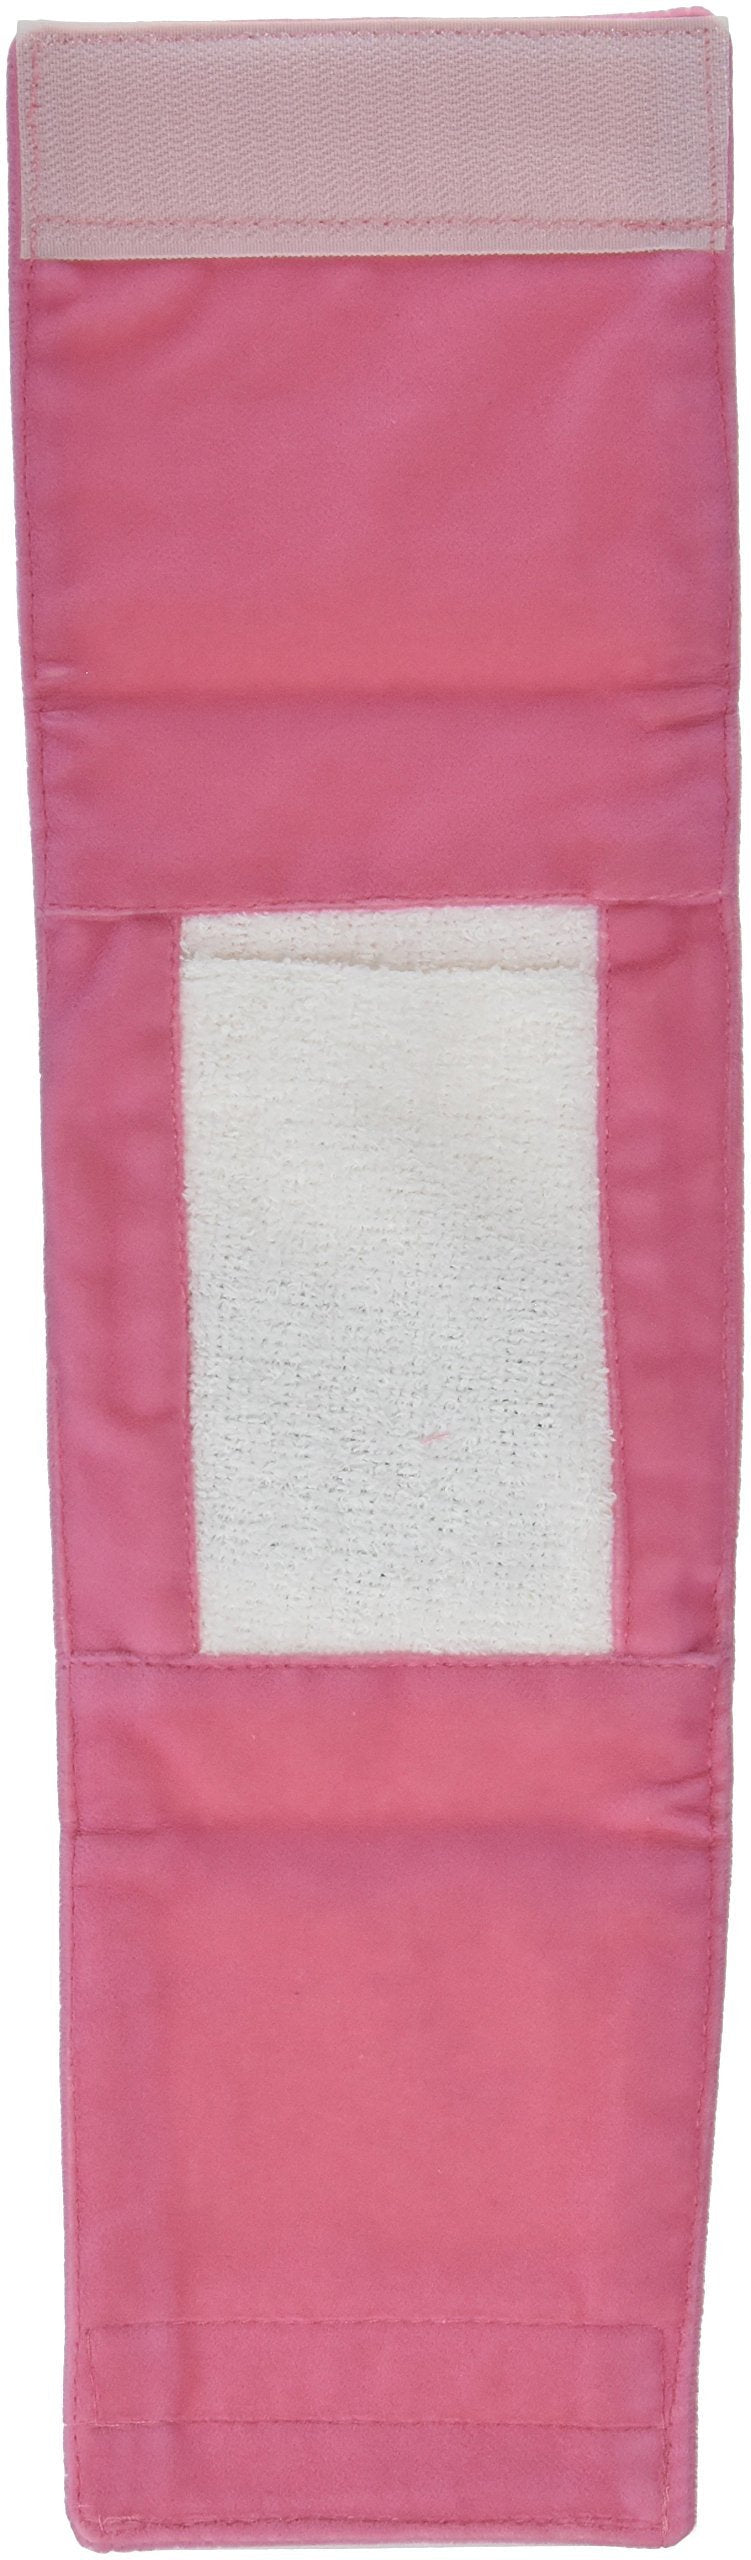 [Australia] - Snoozer Pet Piddle Pads Sanitary Wraps, Small, Pink 